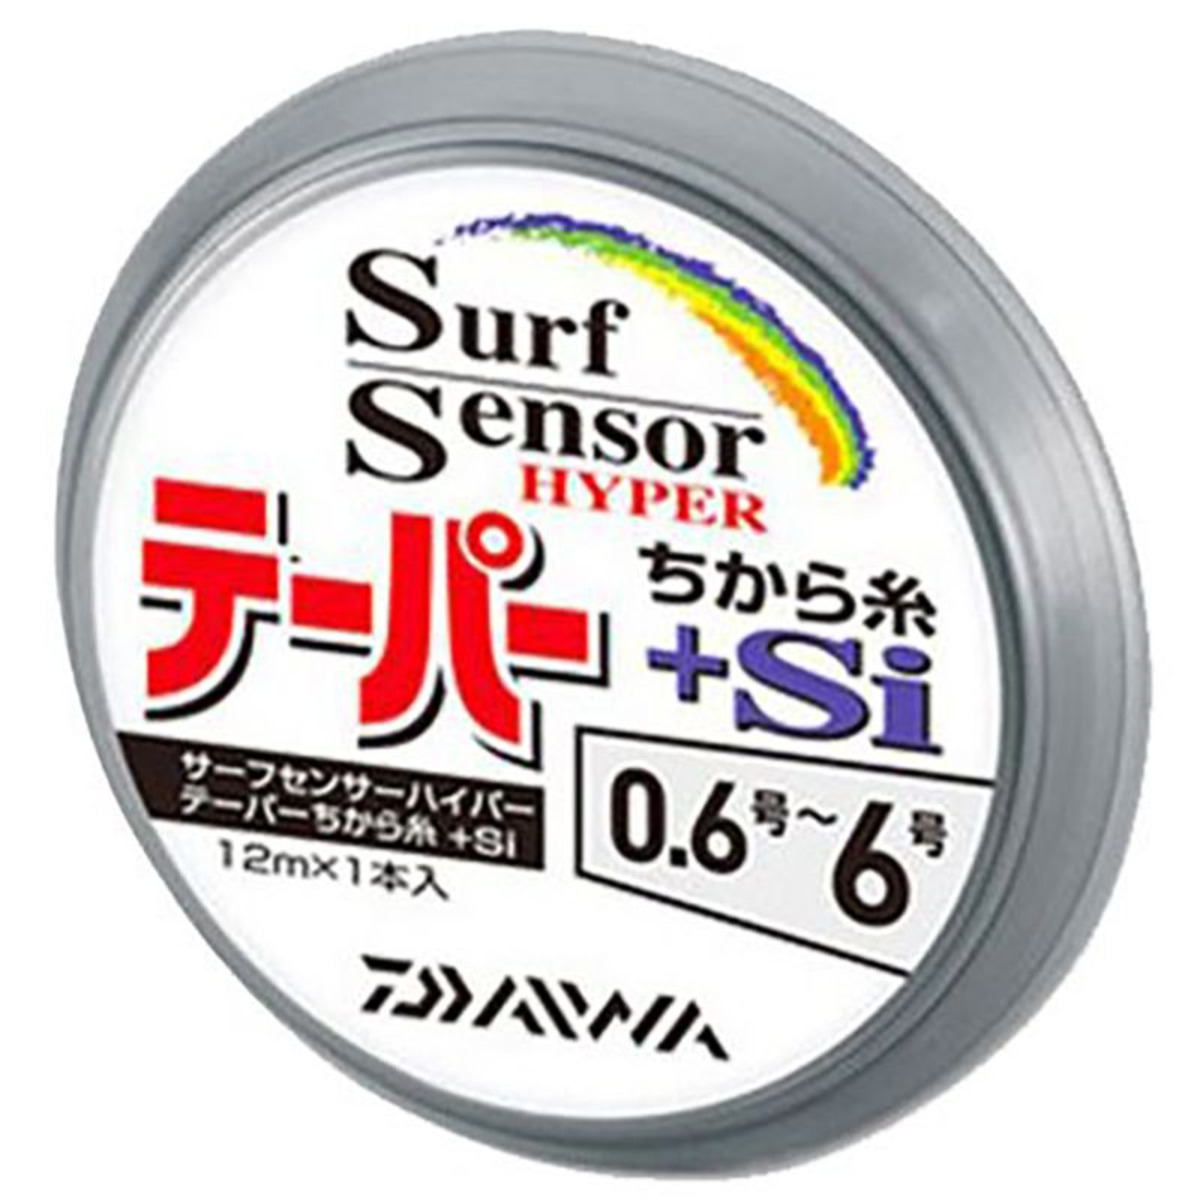 Daiwa Surf Sensor Hyper - 1 / 6 PE - 12 m